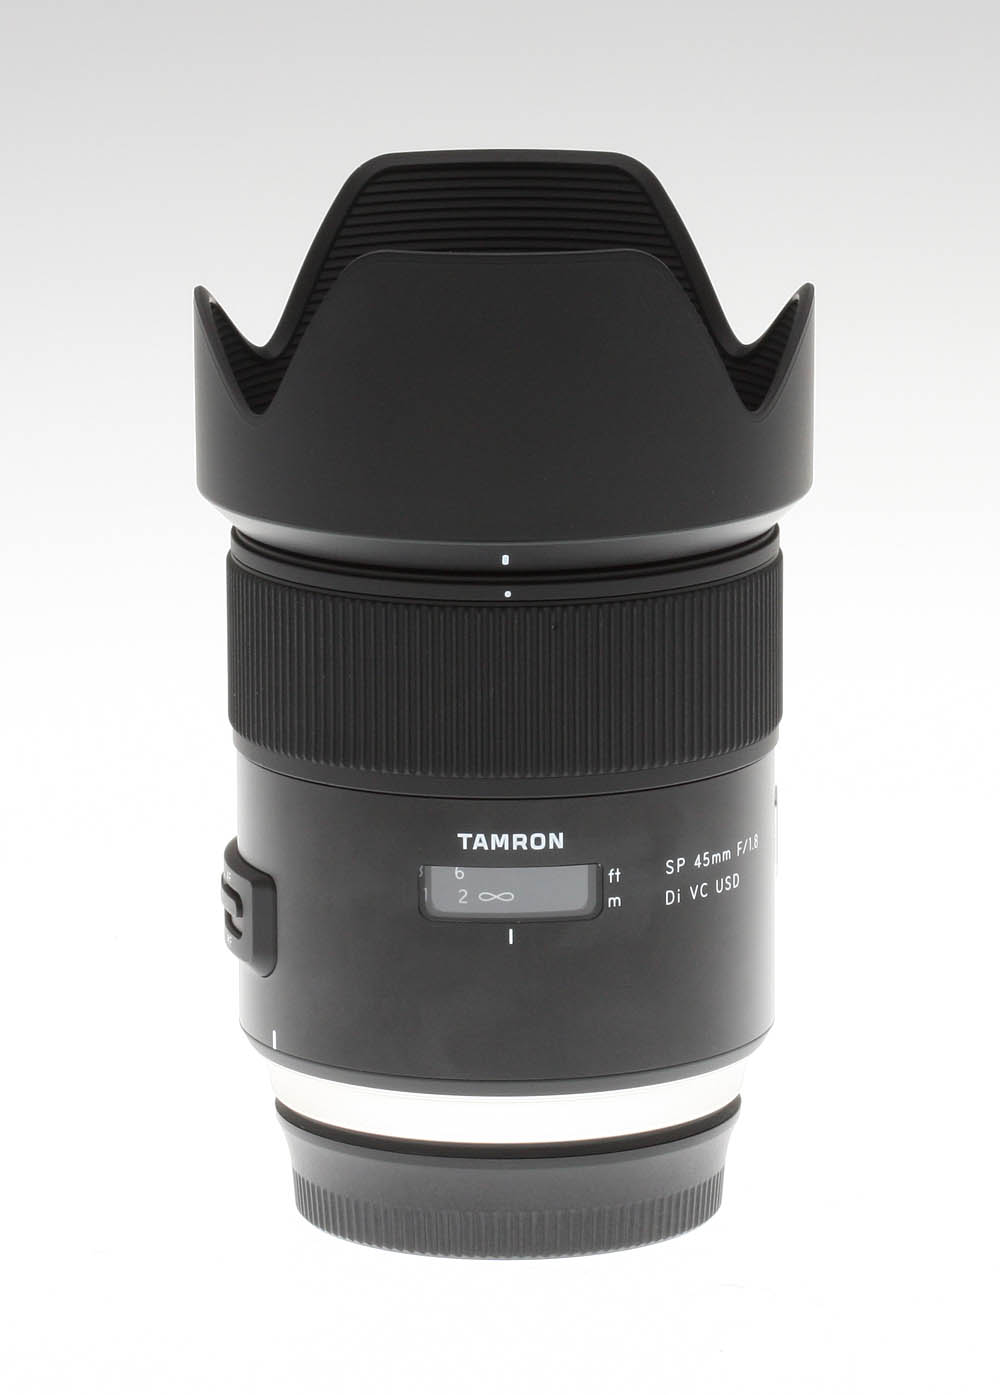 Tamron 45mm f/1.8 Di VC USD SP Review